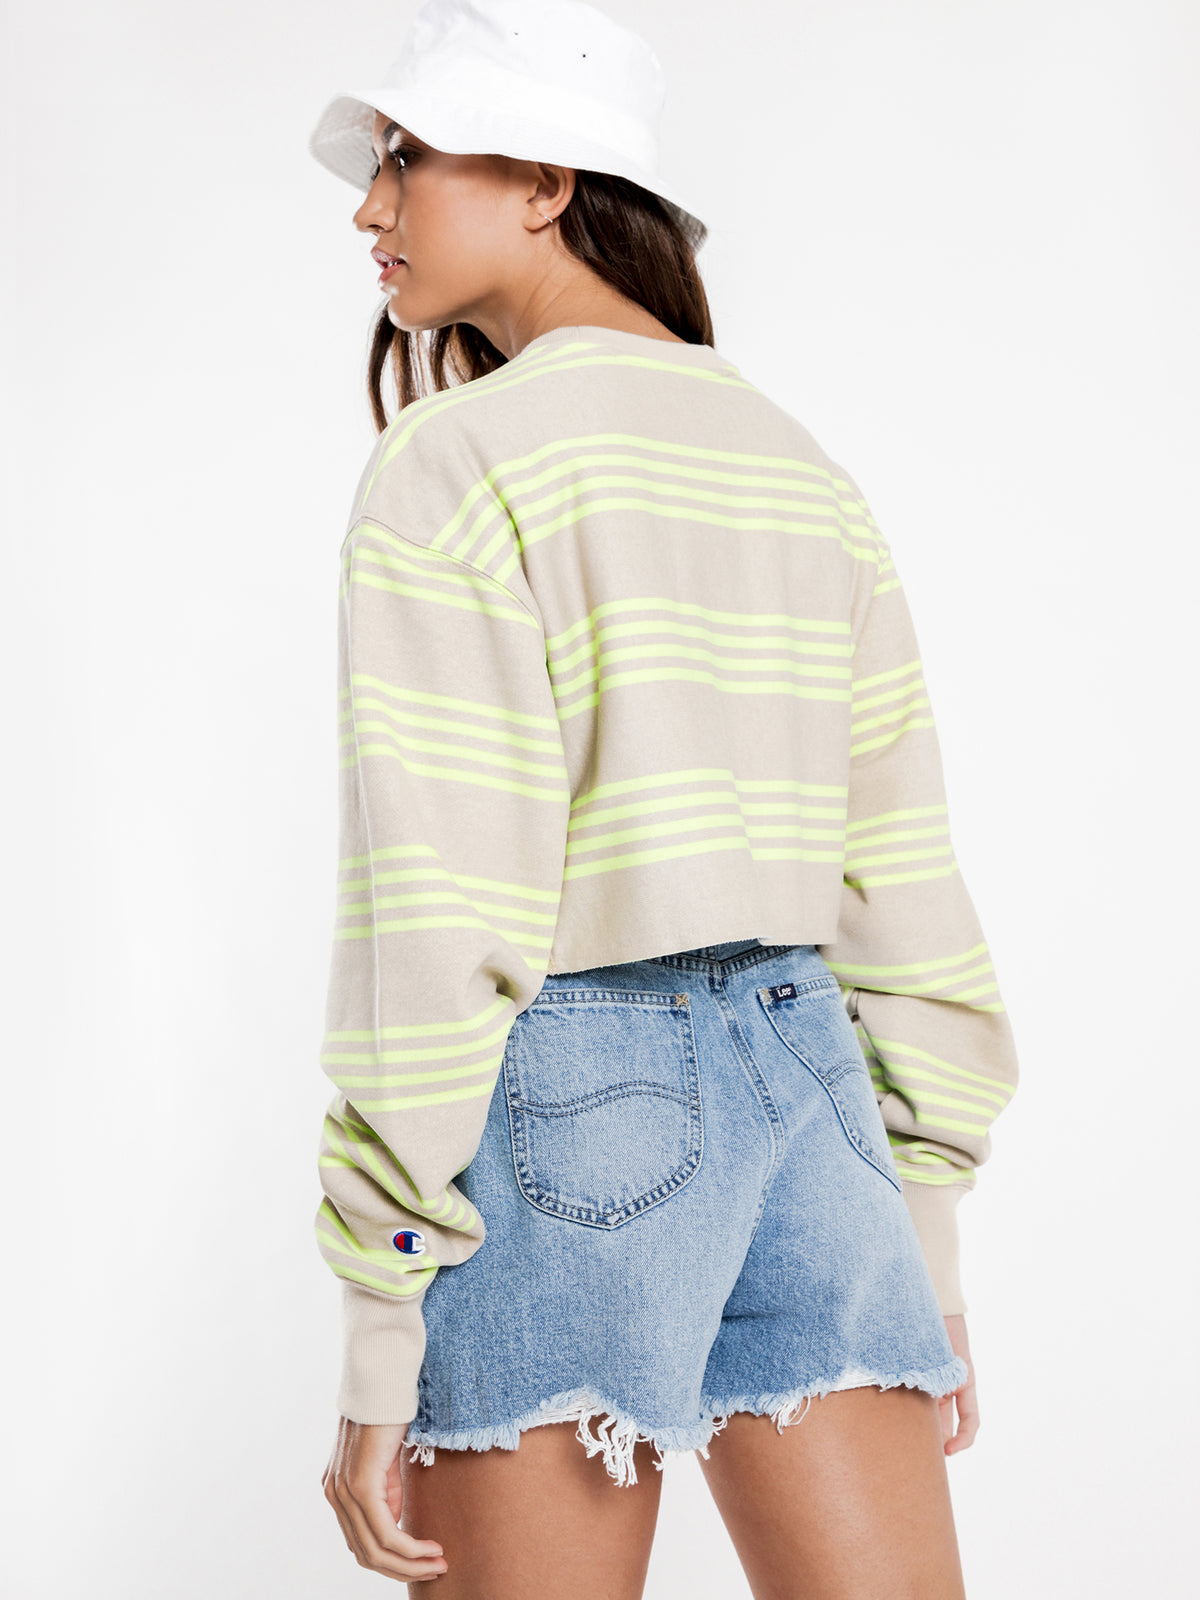 Reverse Weave Crop Crew Sweatshirt in Green Stripe